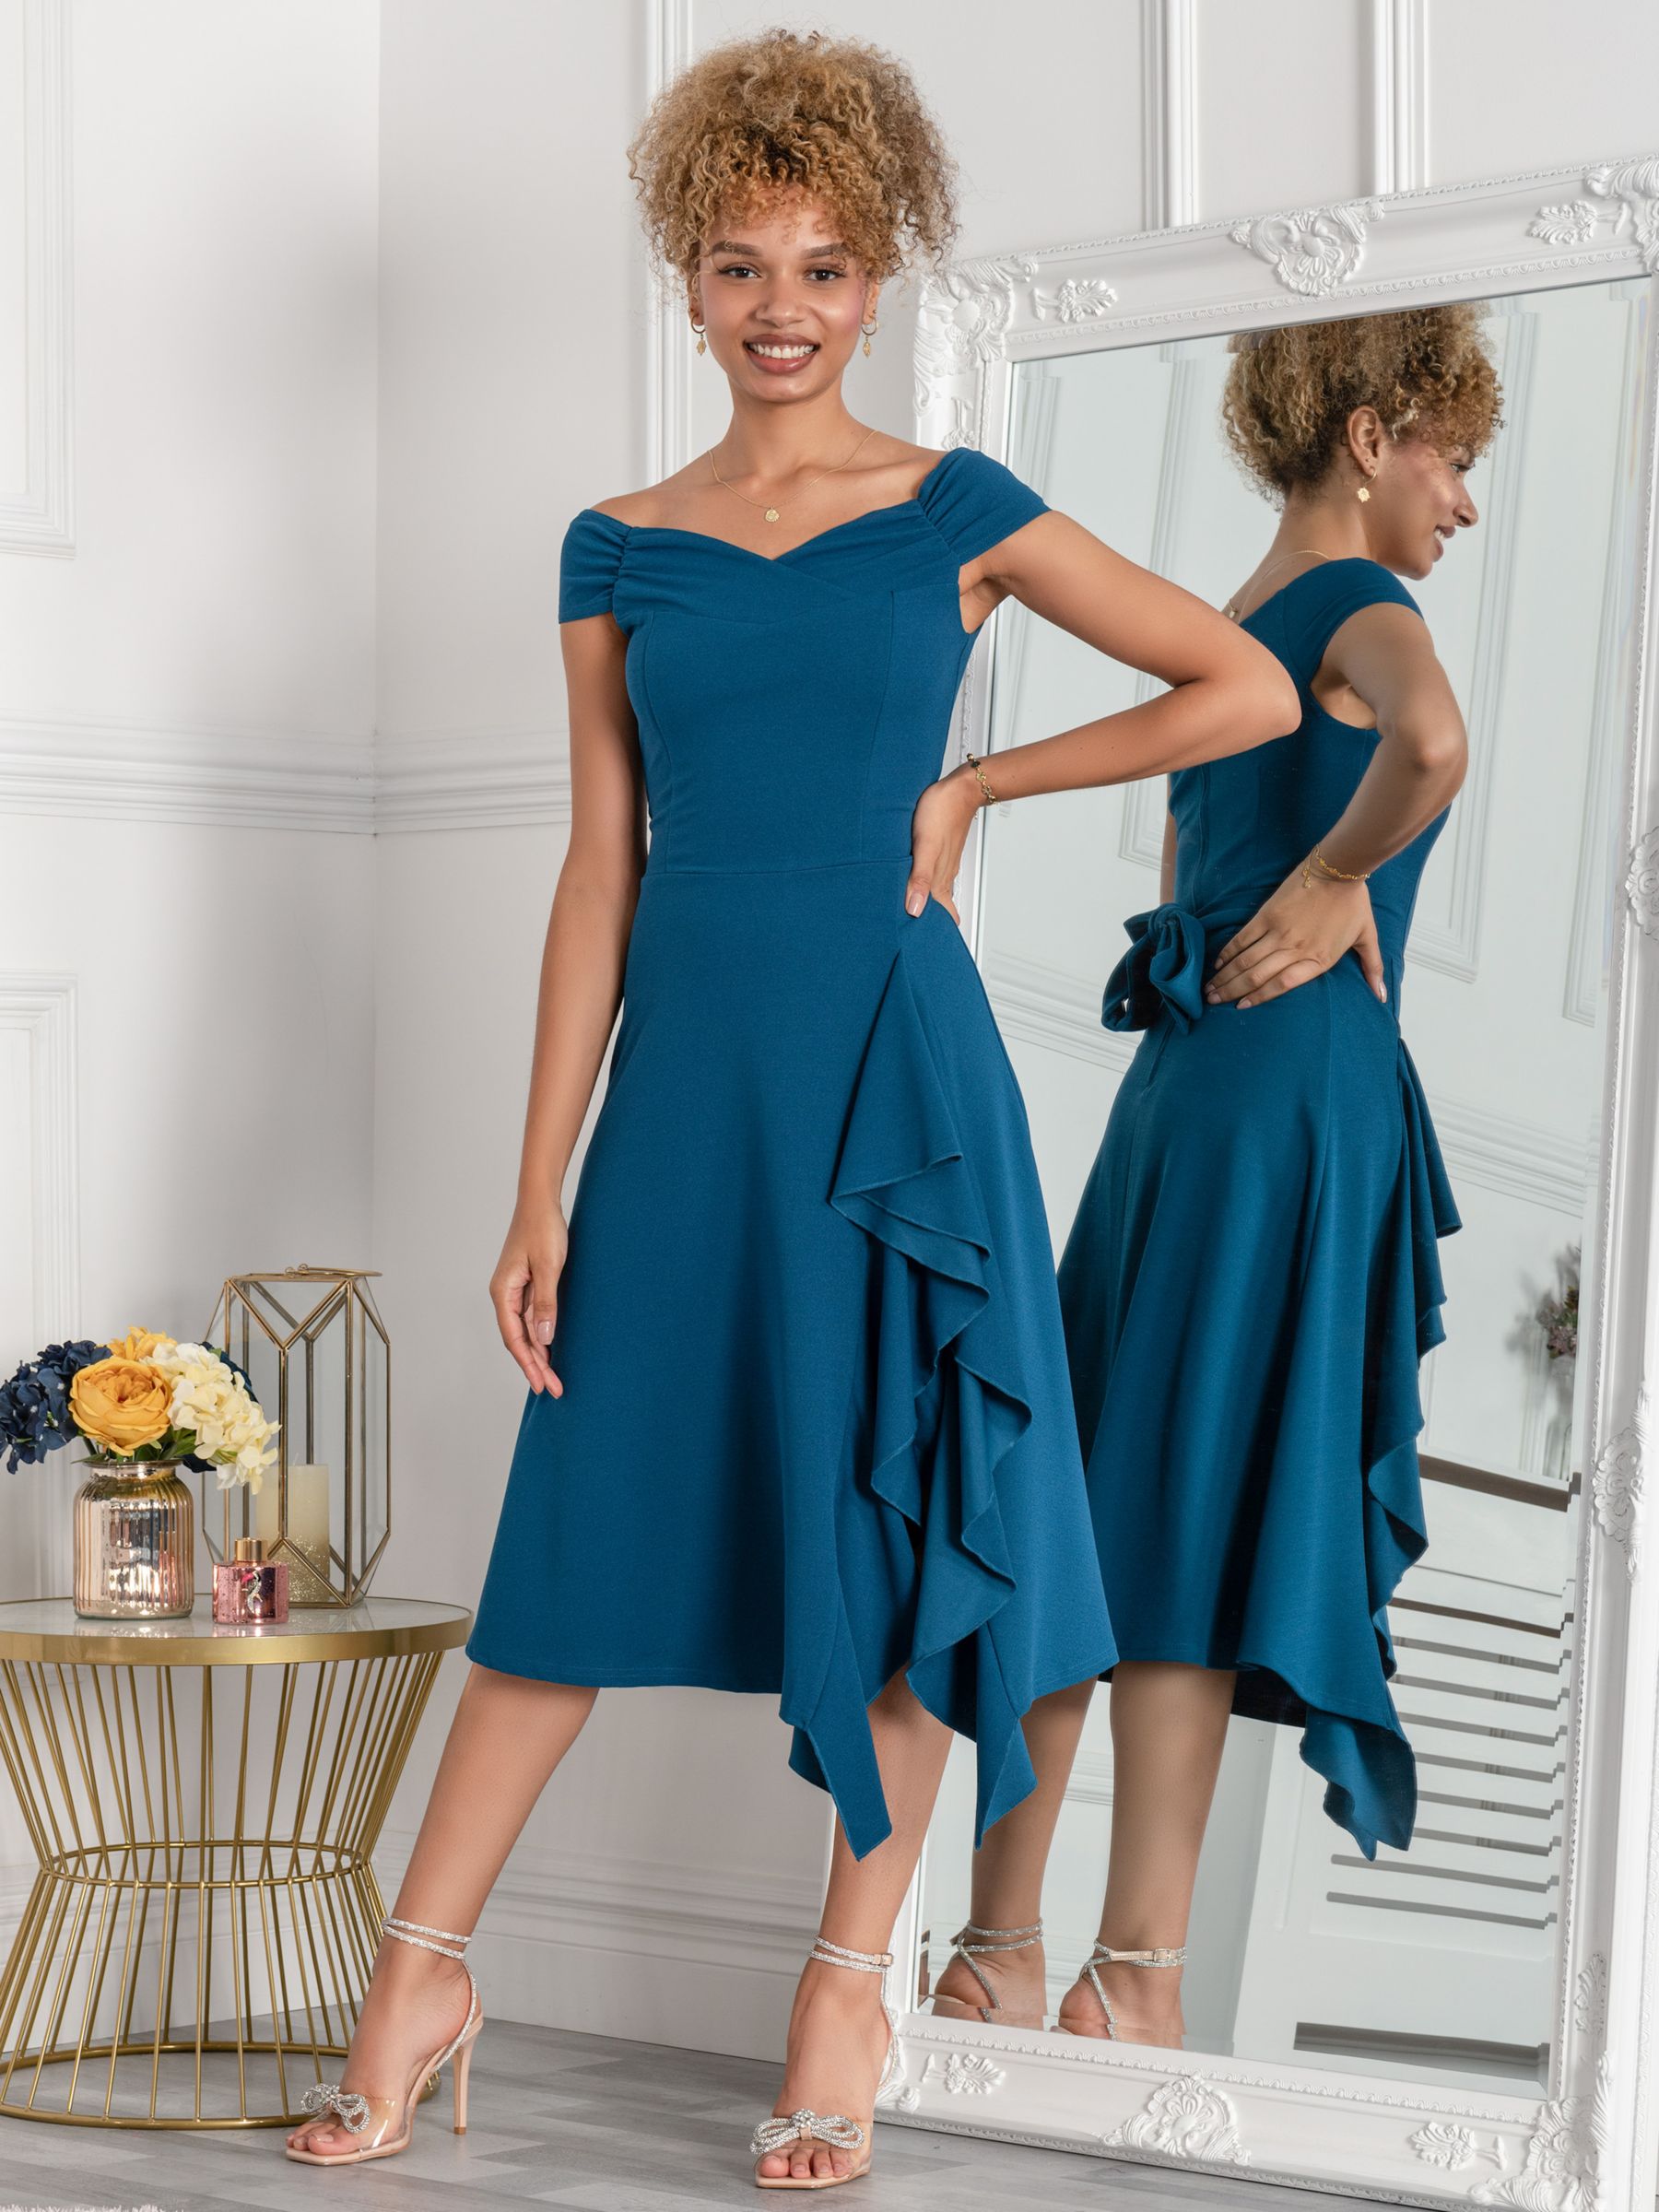 Graphic Knit Mini Dress - Women - Ready-to-Wear